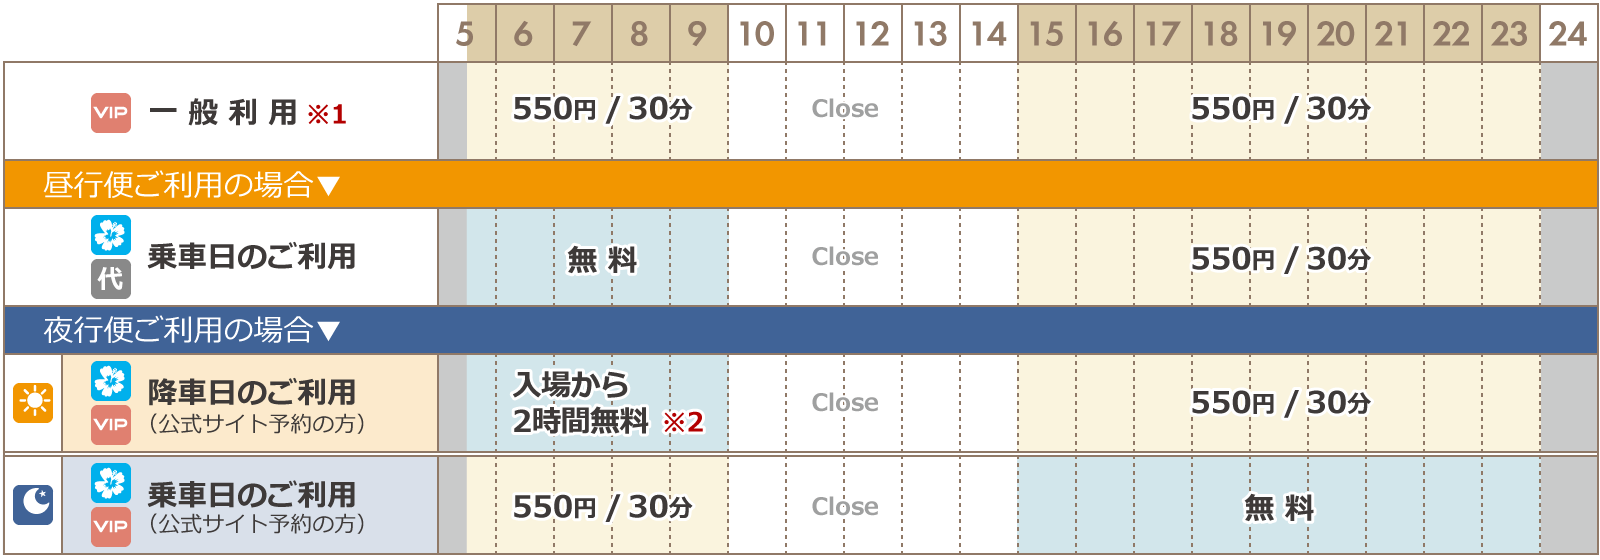 Nagoya VIP Lounge price guidance